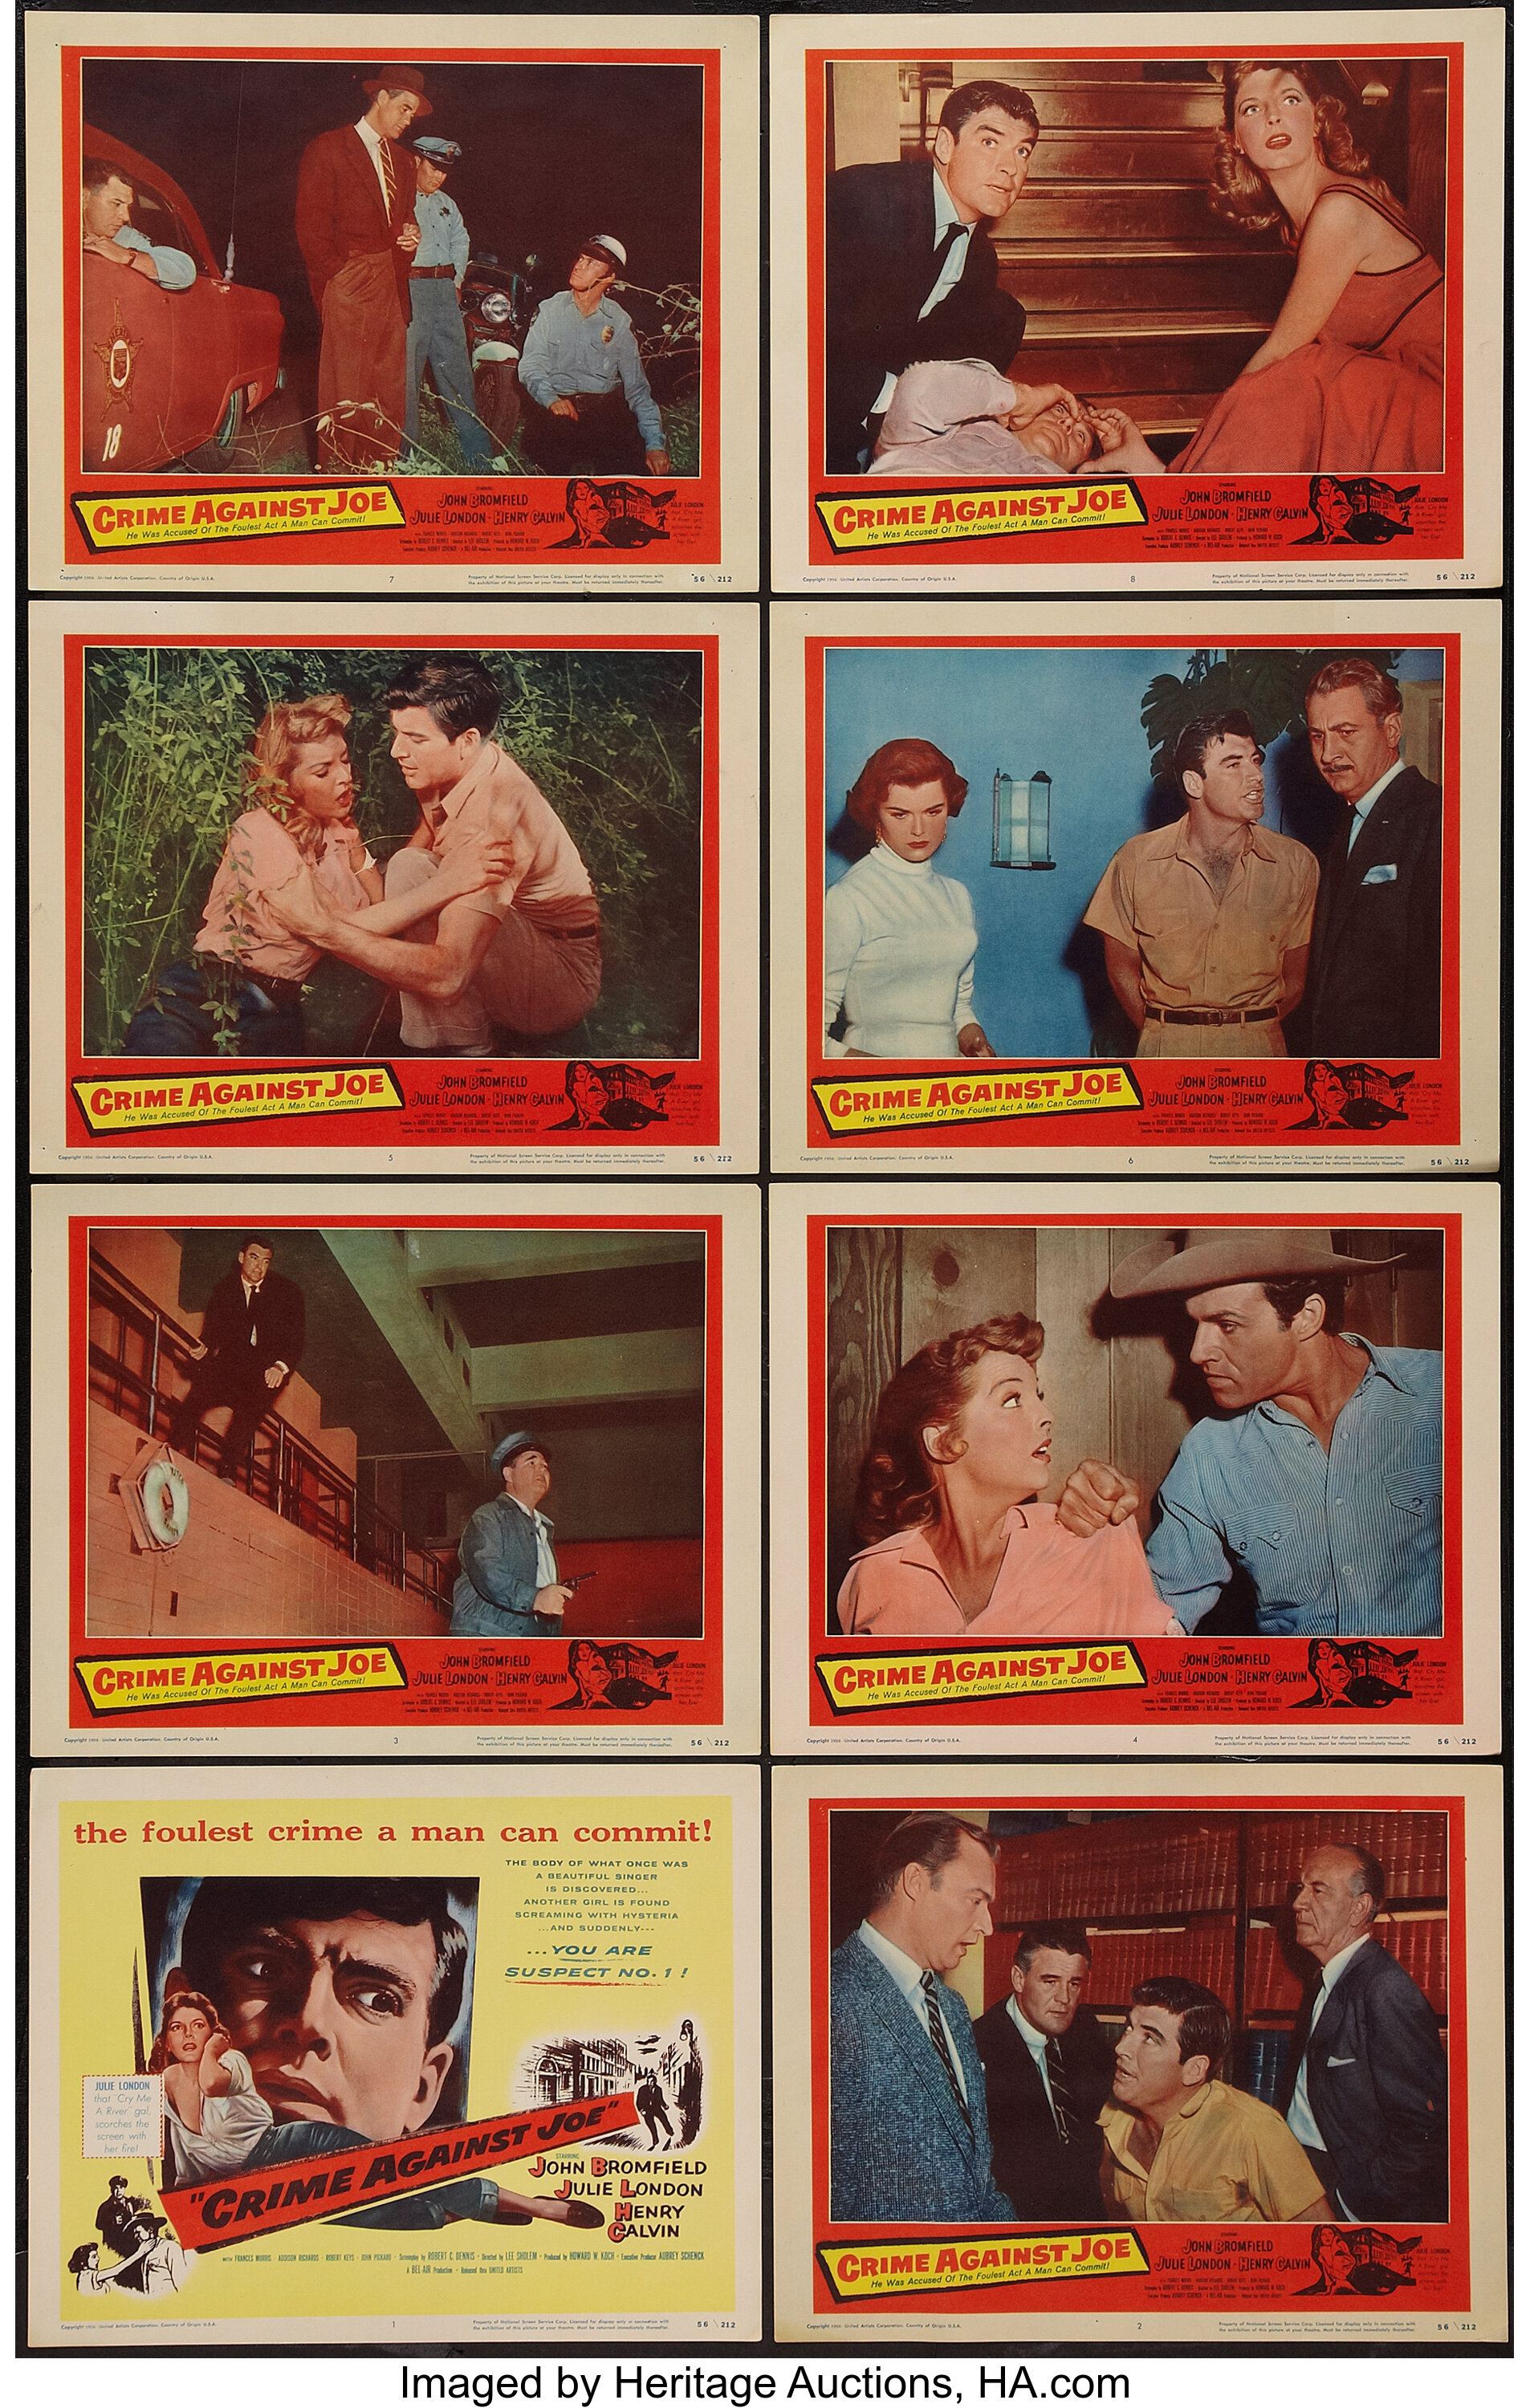 Crime Against Joe United Artists 1956 Lobby Card Set Of 8 11 Lot 54110 Heritage Auctions 4052